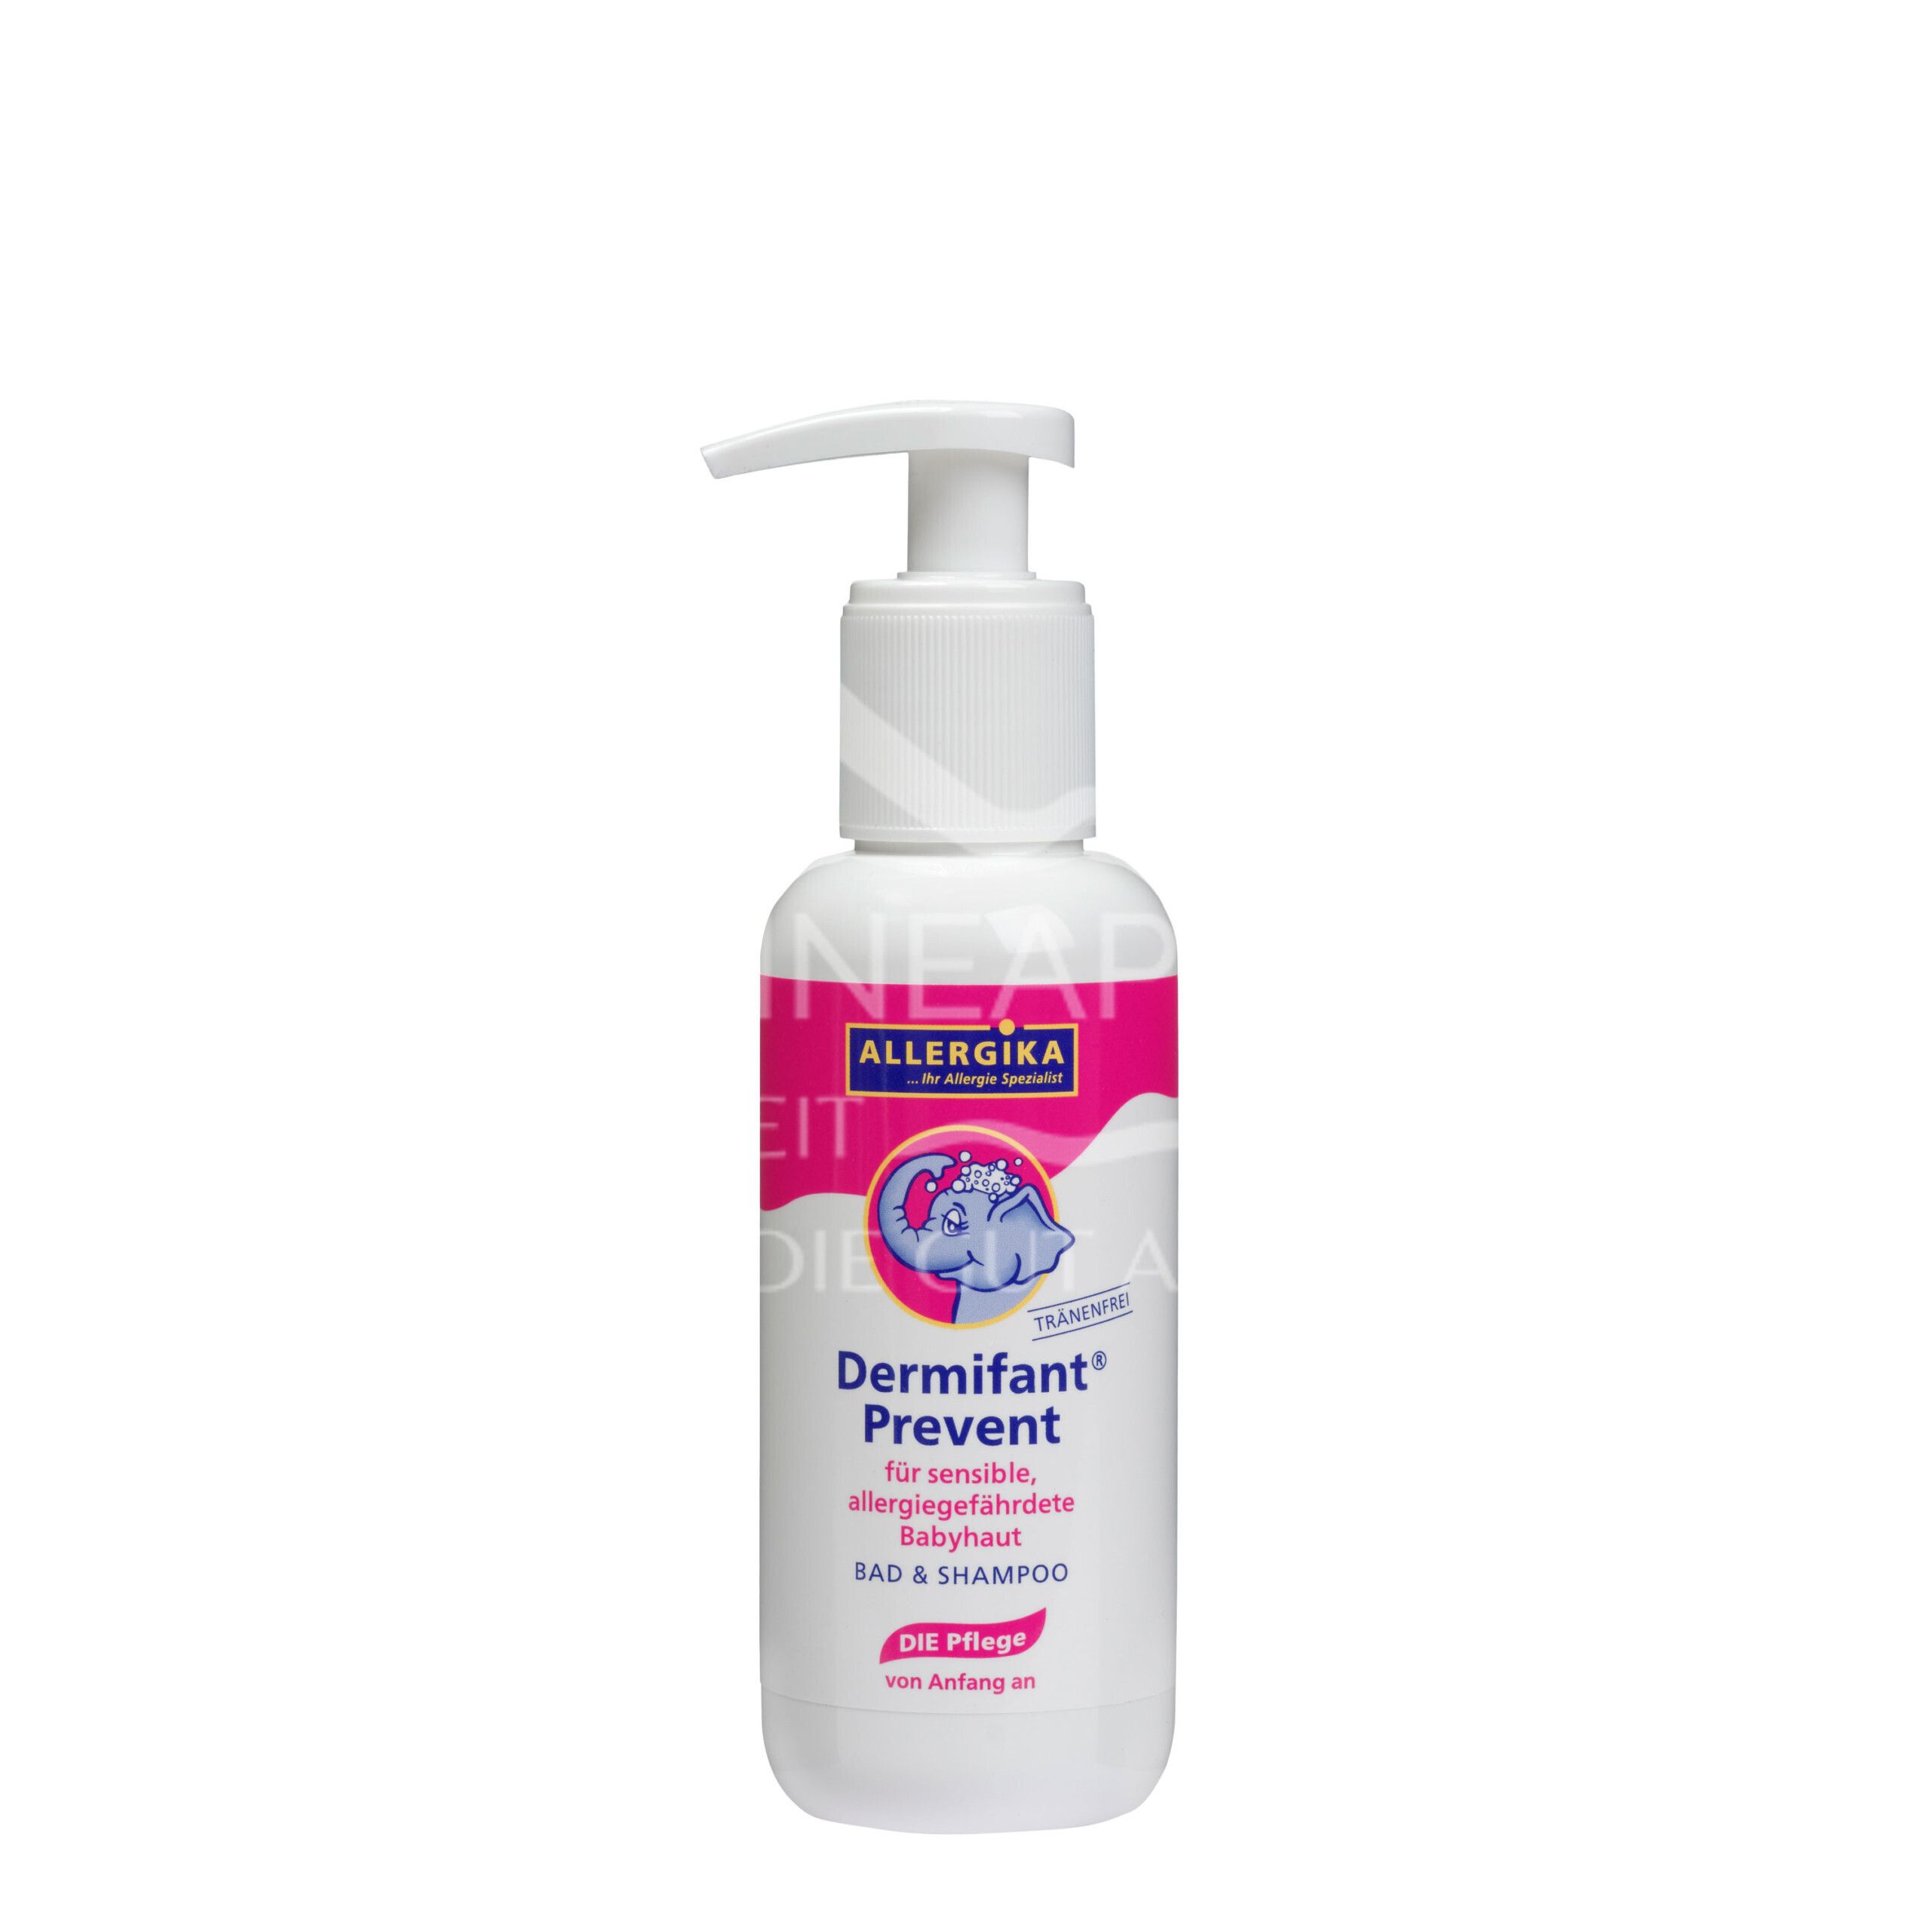 Dermifant® Prevent Bad & Shampoo